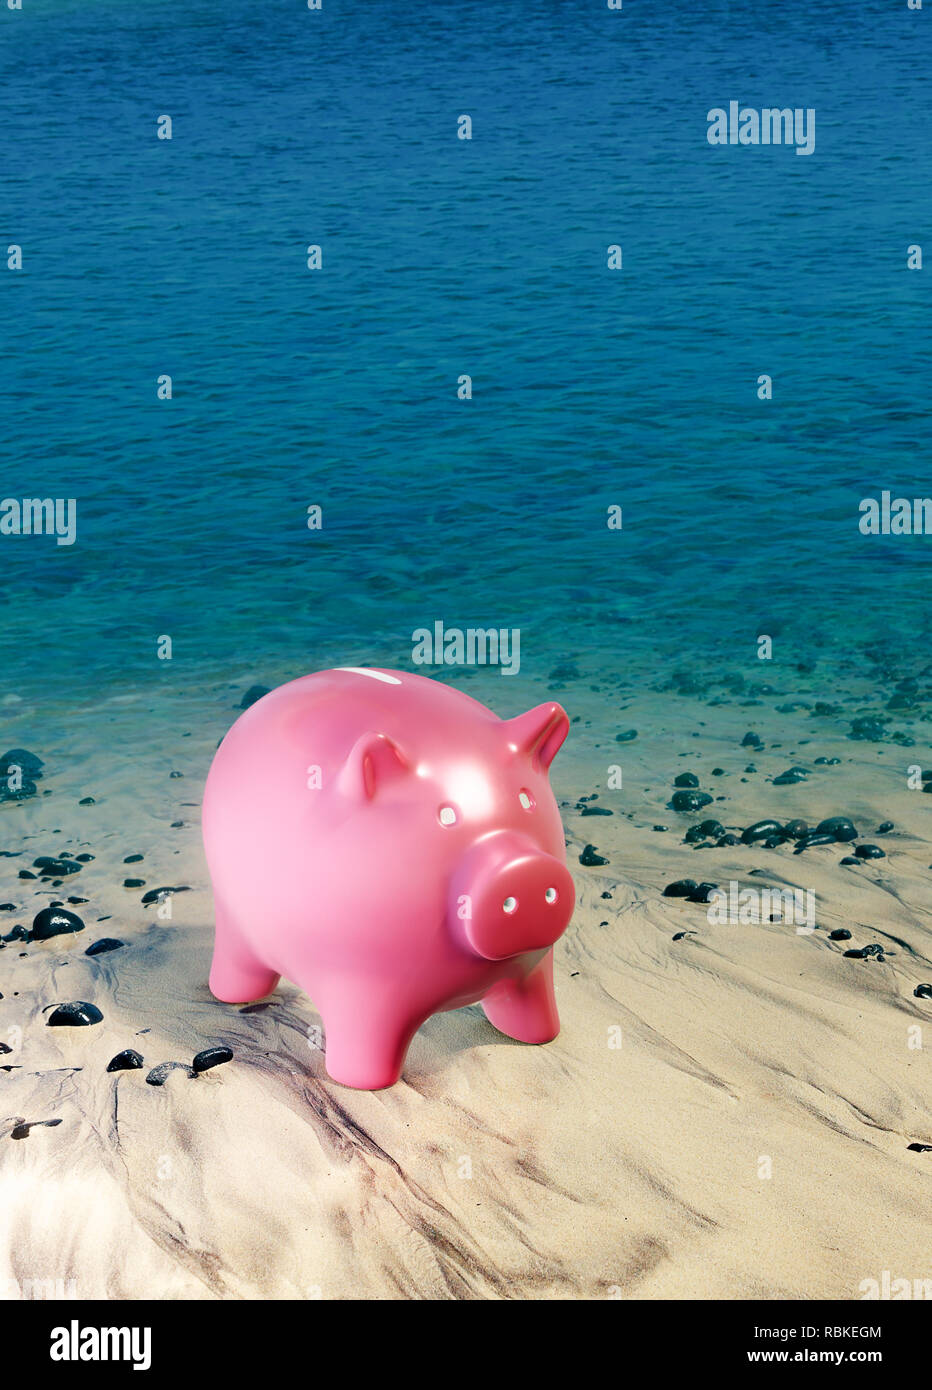 Piggy bank holidays, saving money concept, 3D illustration Stock Photo